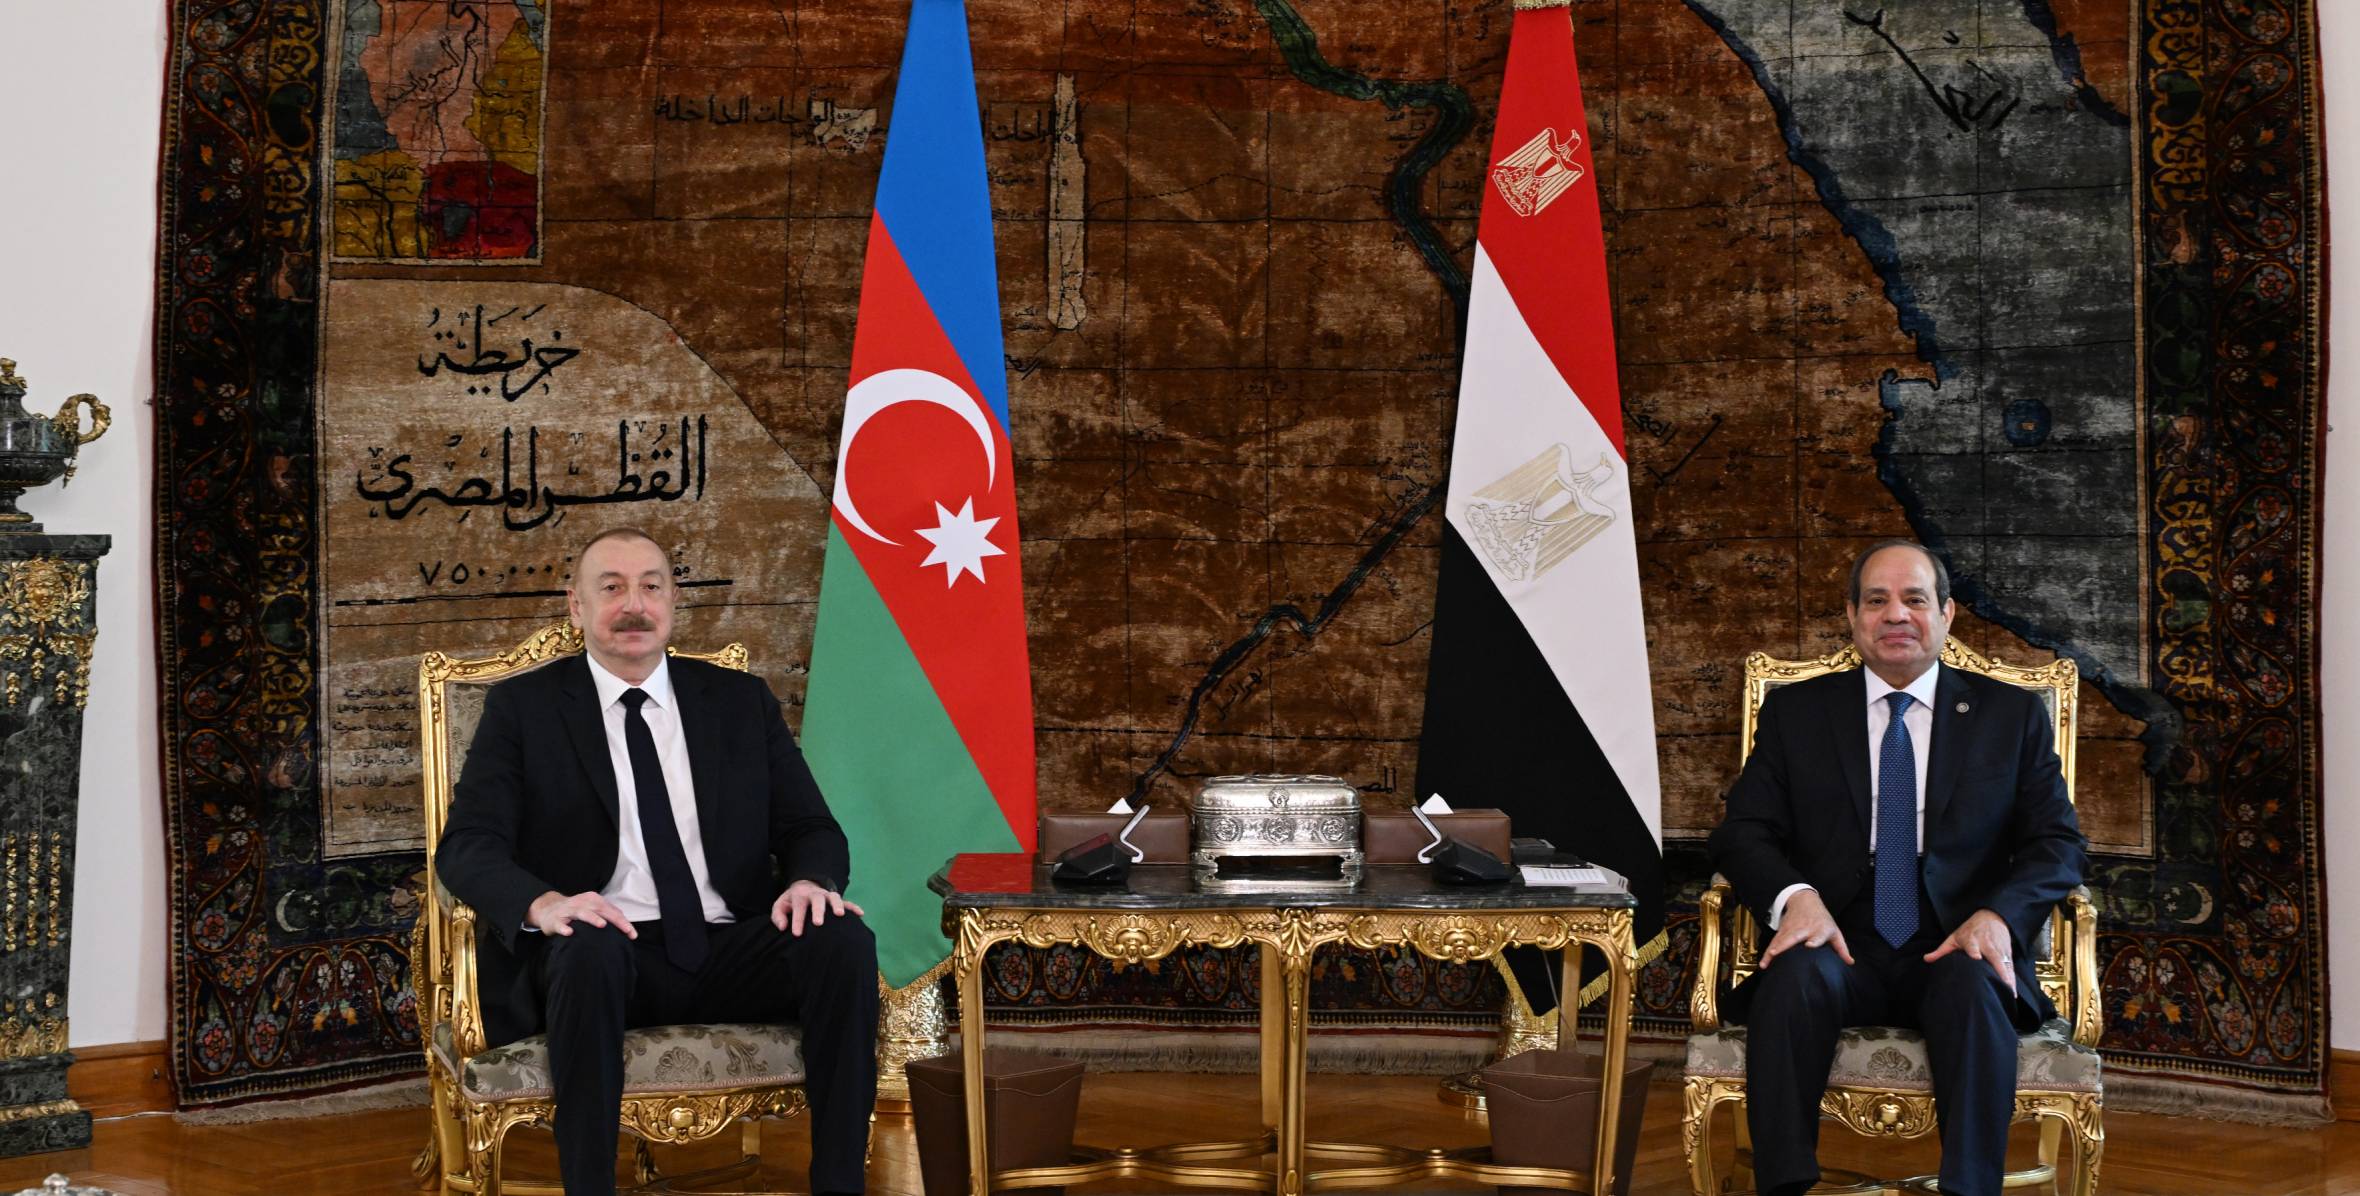 Ilham Aliyev held one-on-one meeting with President Abdel Fattah El-Sisi